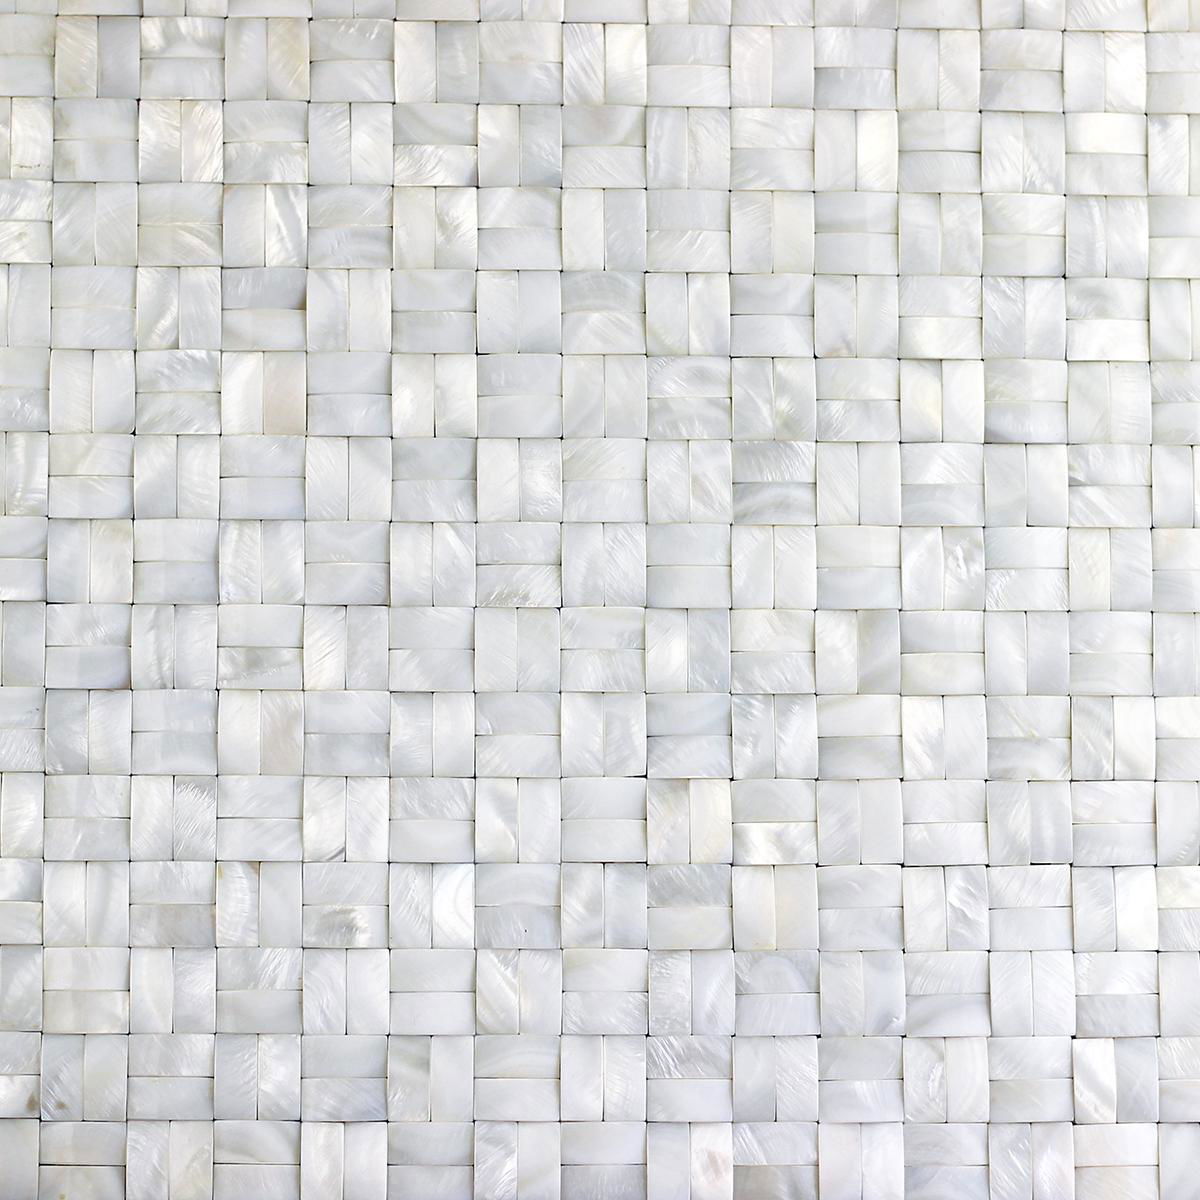 3D Bamboo Weaving Pattern White Fresh Water Shell Mosaic Tiles Mounted on Mesh